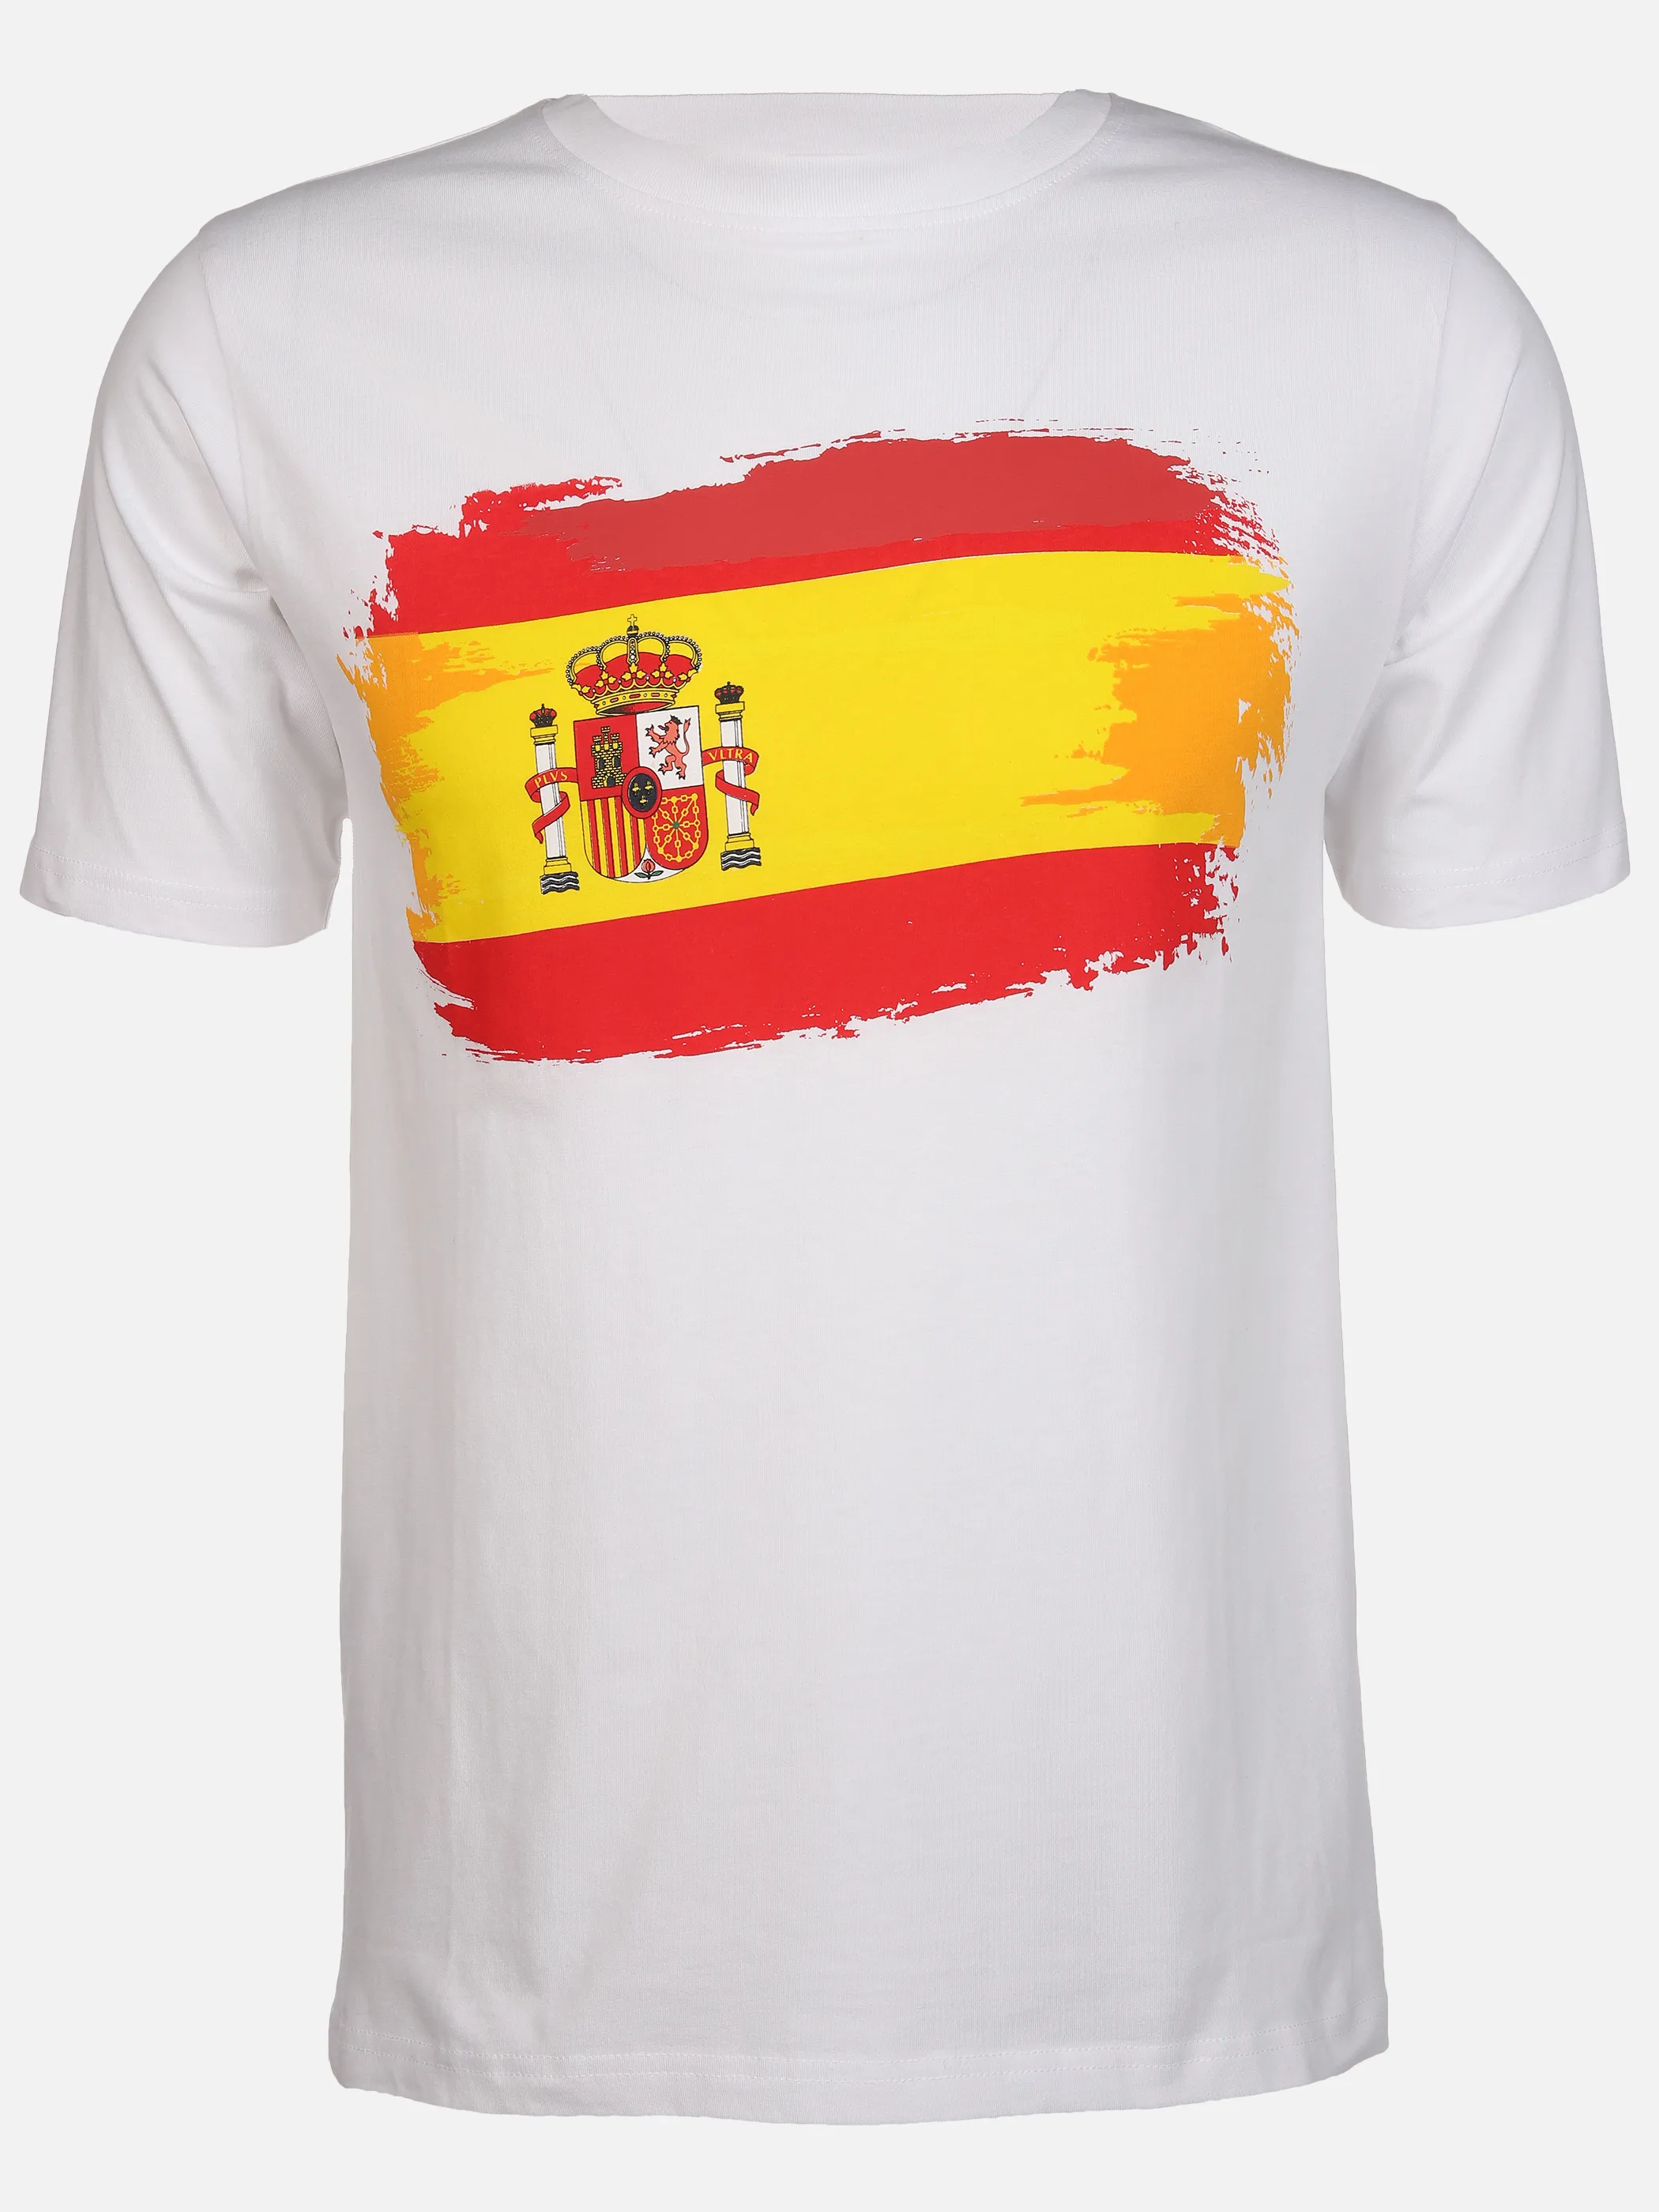 Grinario Sports Unisex T-Shirt EM24 Weiß 889225 W2 1